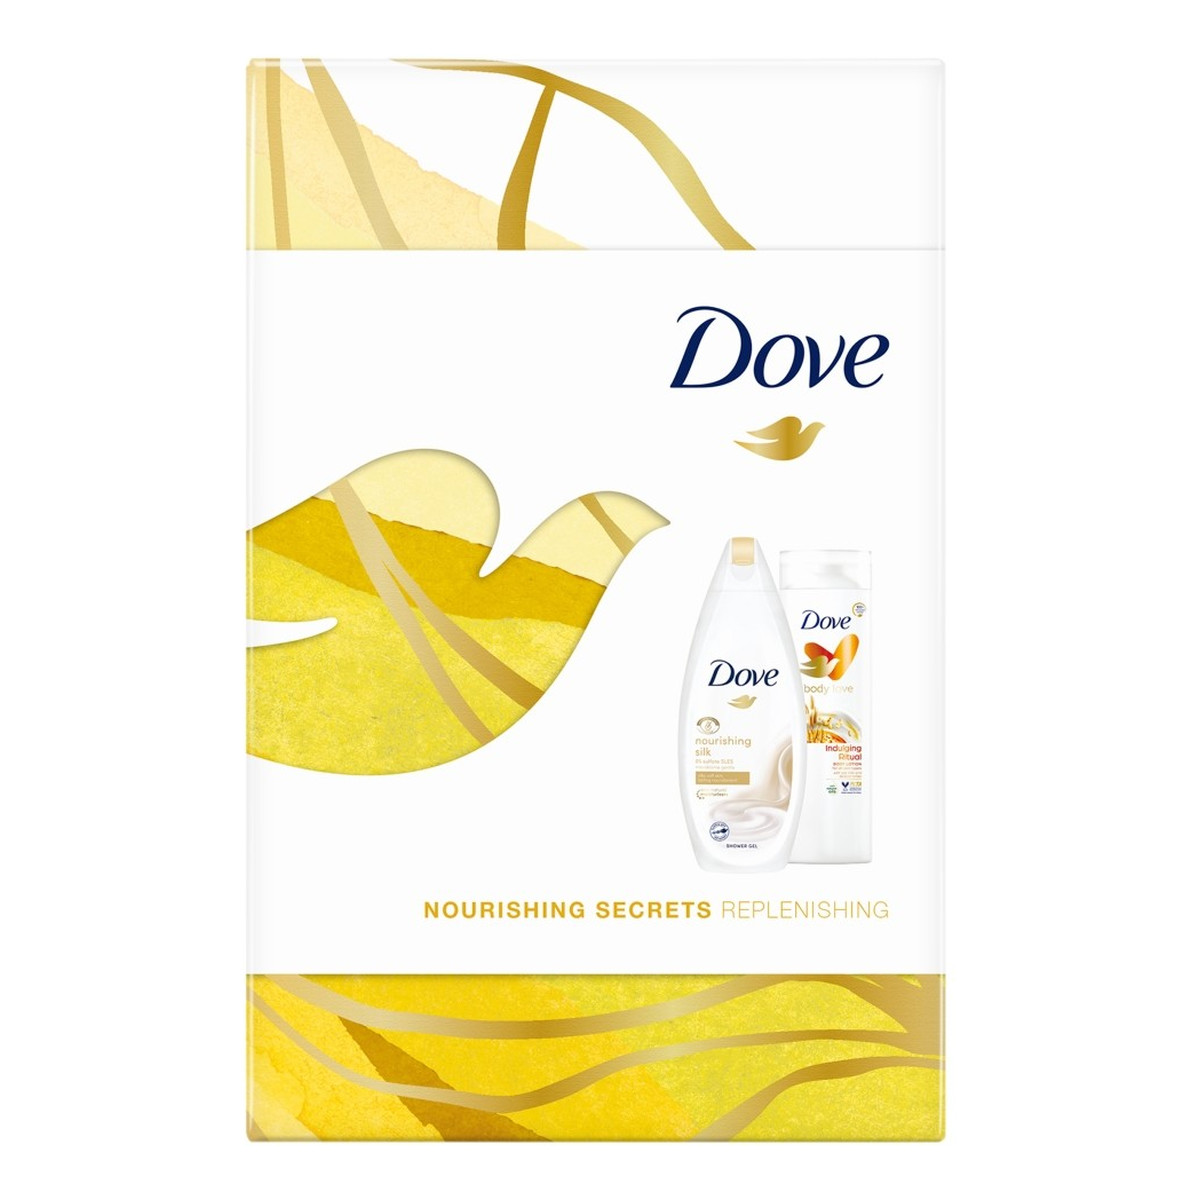 Dove Nourishing Secrets Replenishing Zestaw kosmetyków 500ml